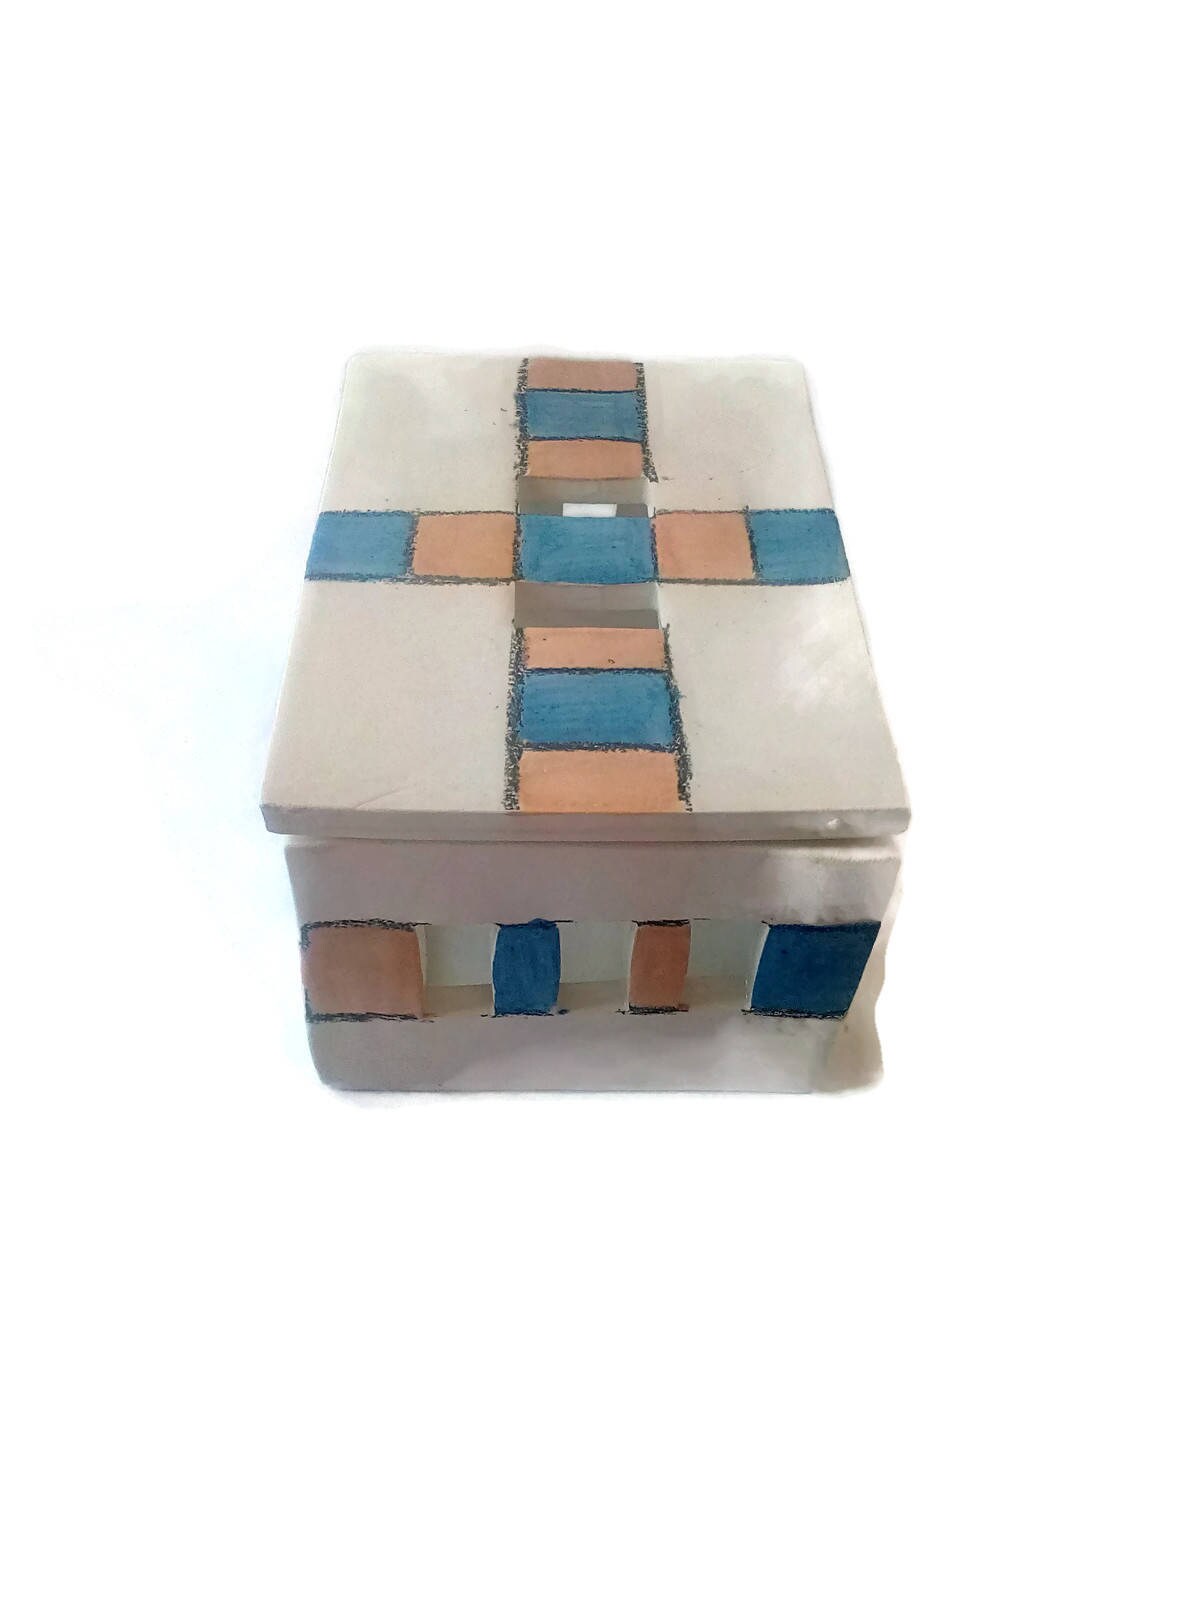 UNIQUE JEWELRY BOX, Hand Painted Large Jewelry Box With Lid, Decorative Ceramic Minimalist Box, Modern Treasure Box - Ceramica Ana Rafael